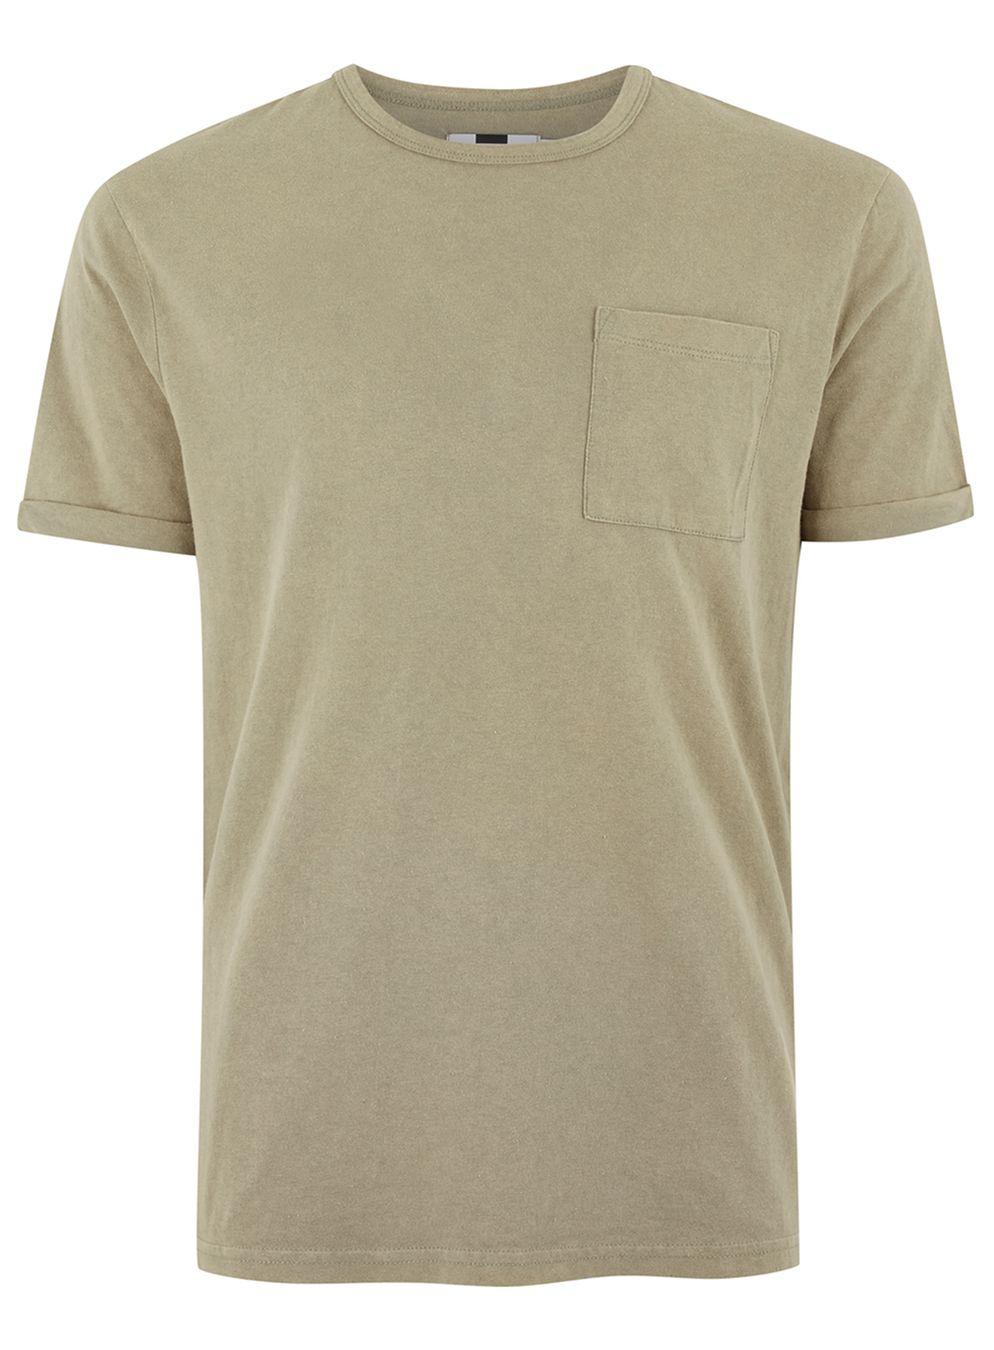 Lyst - Topman Khaki Heavy Weight Pocket T-shirt in Natural for Men